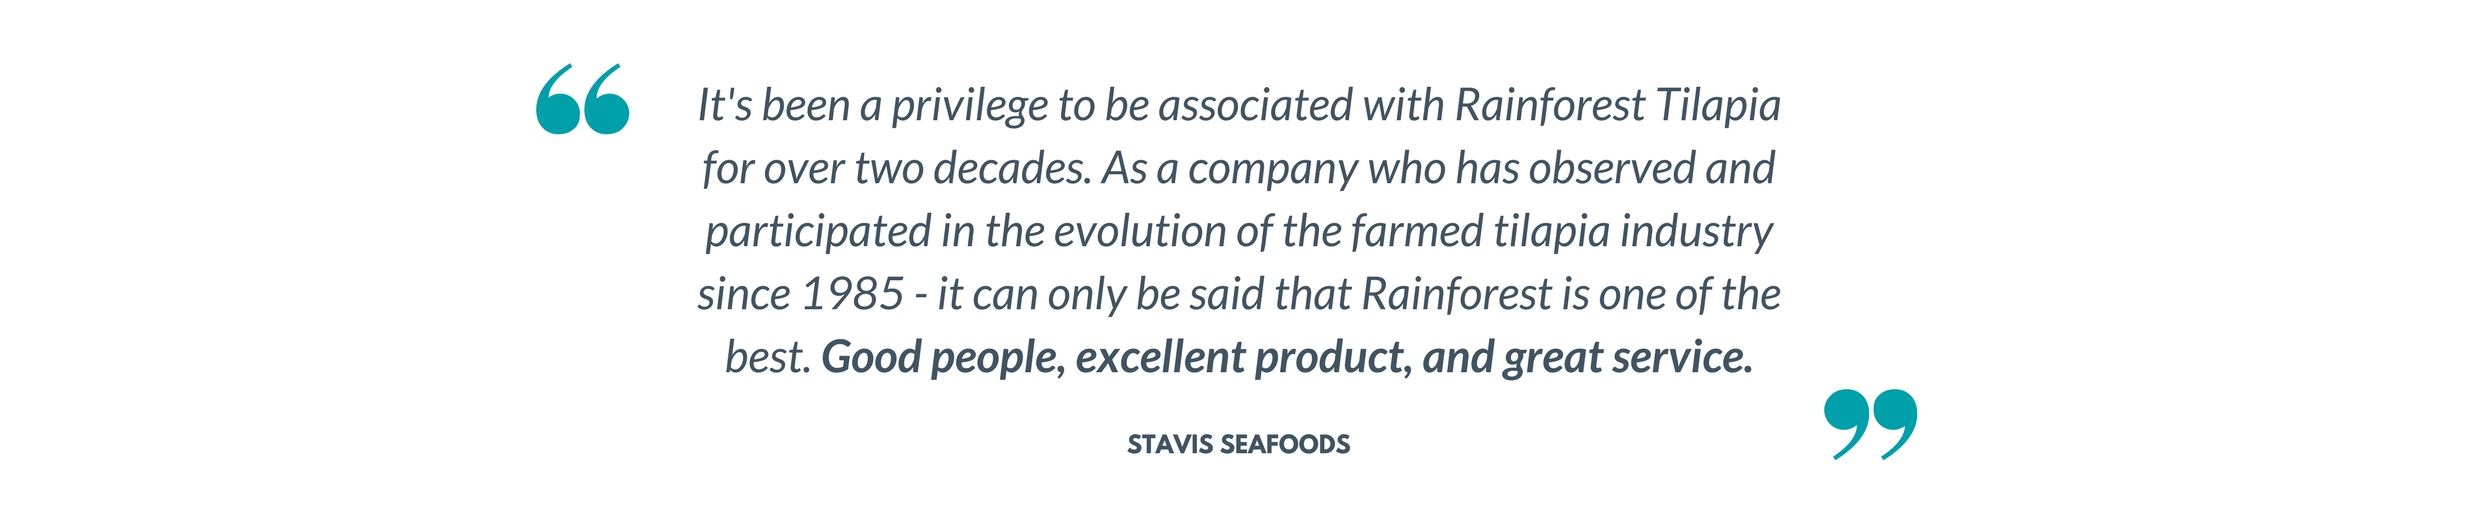 rainforest tilapia review - stavis seafoods.jpg